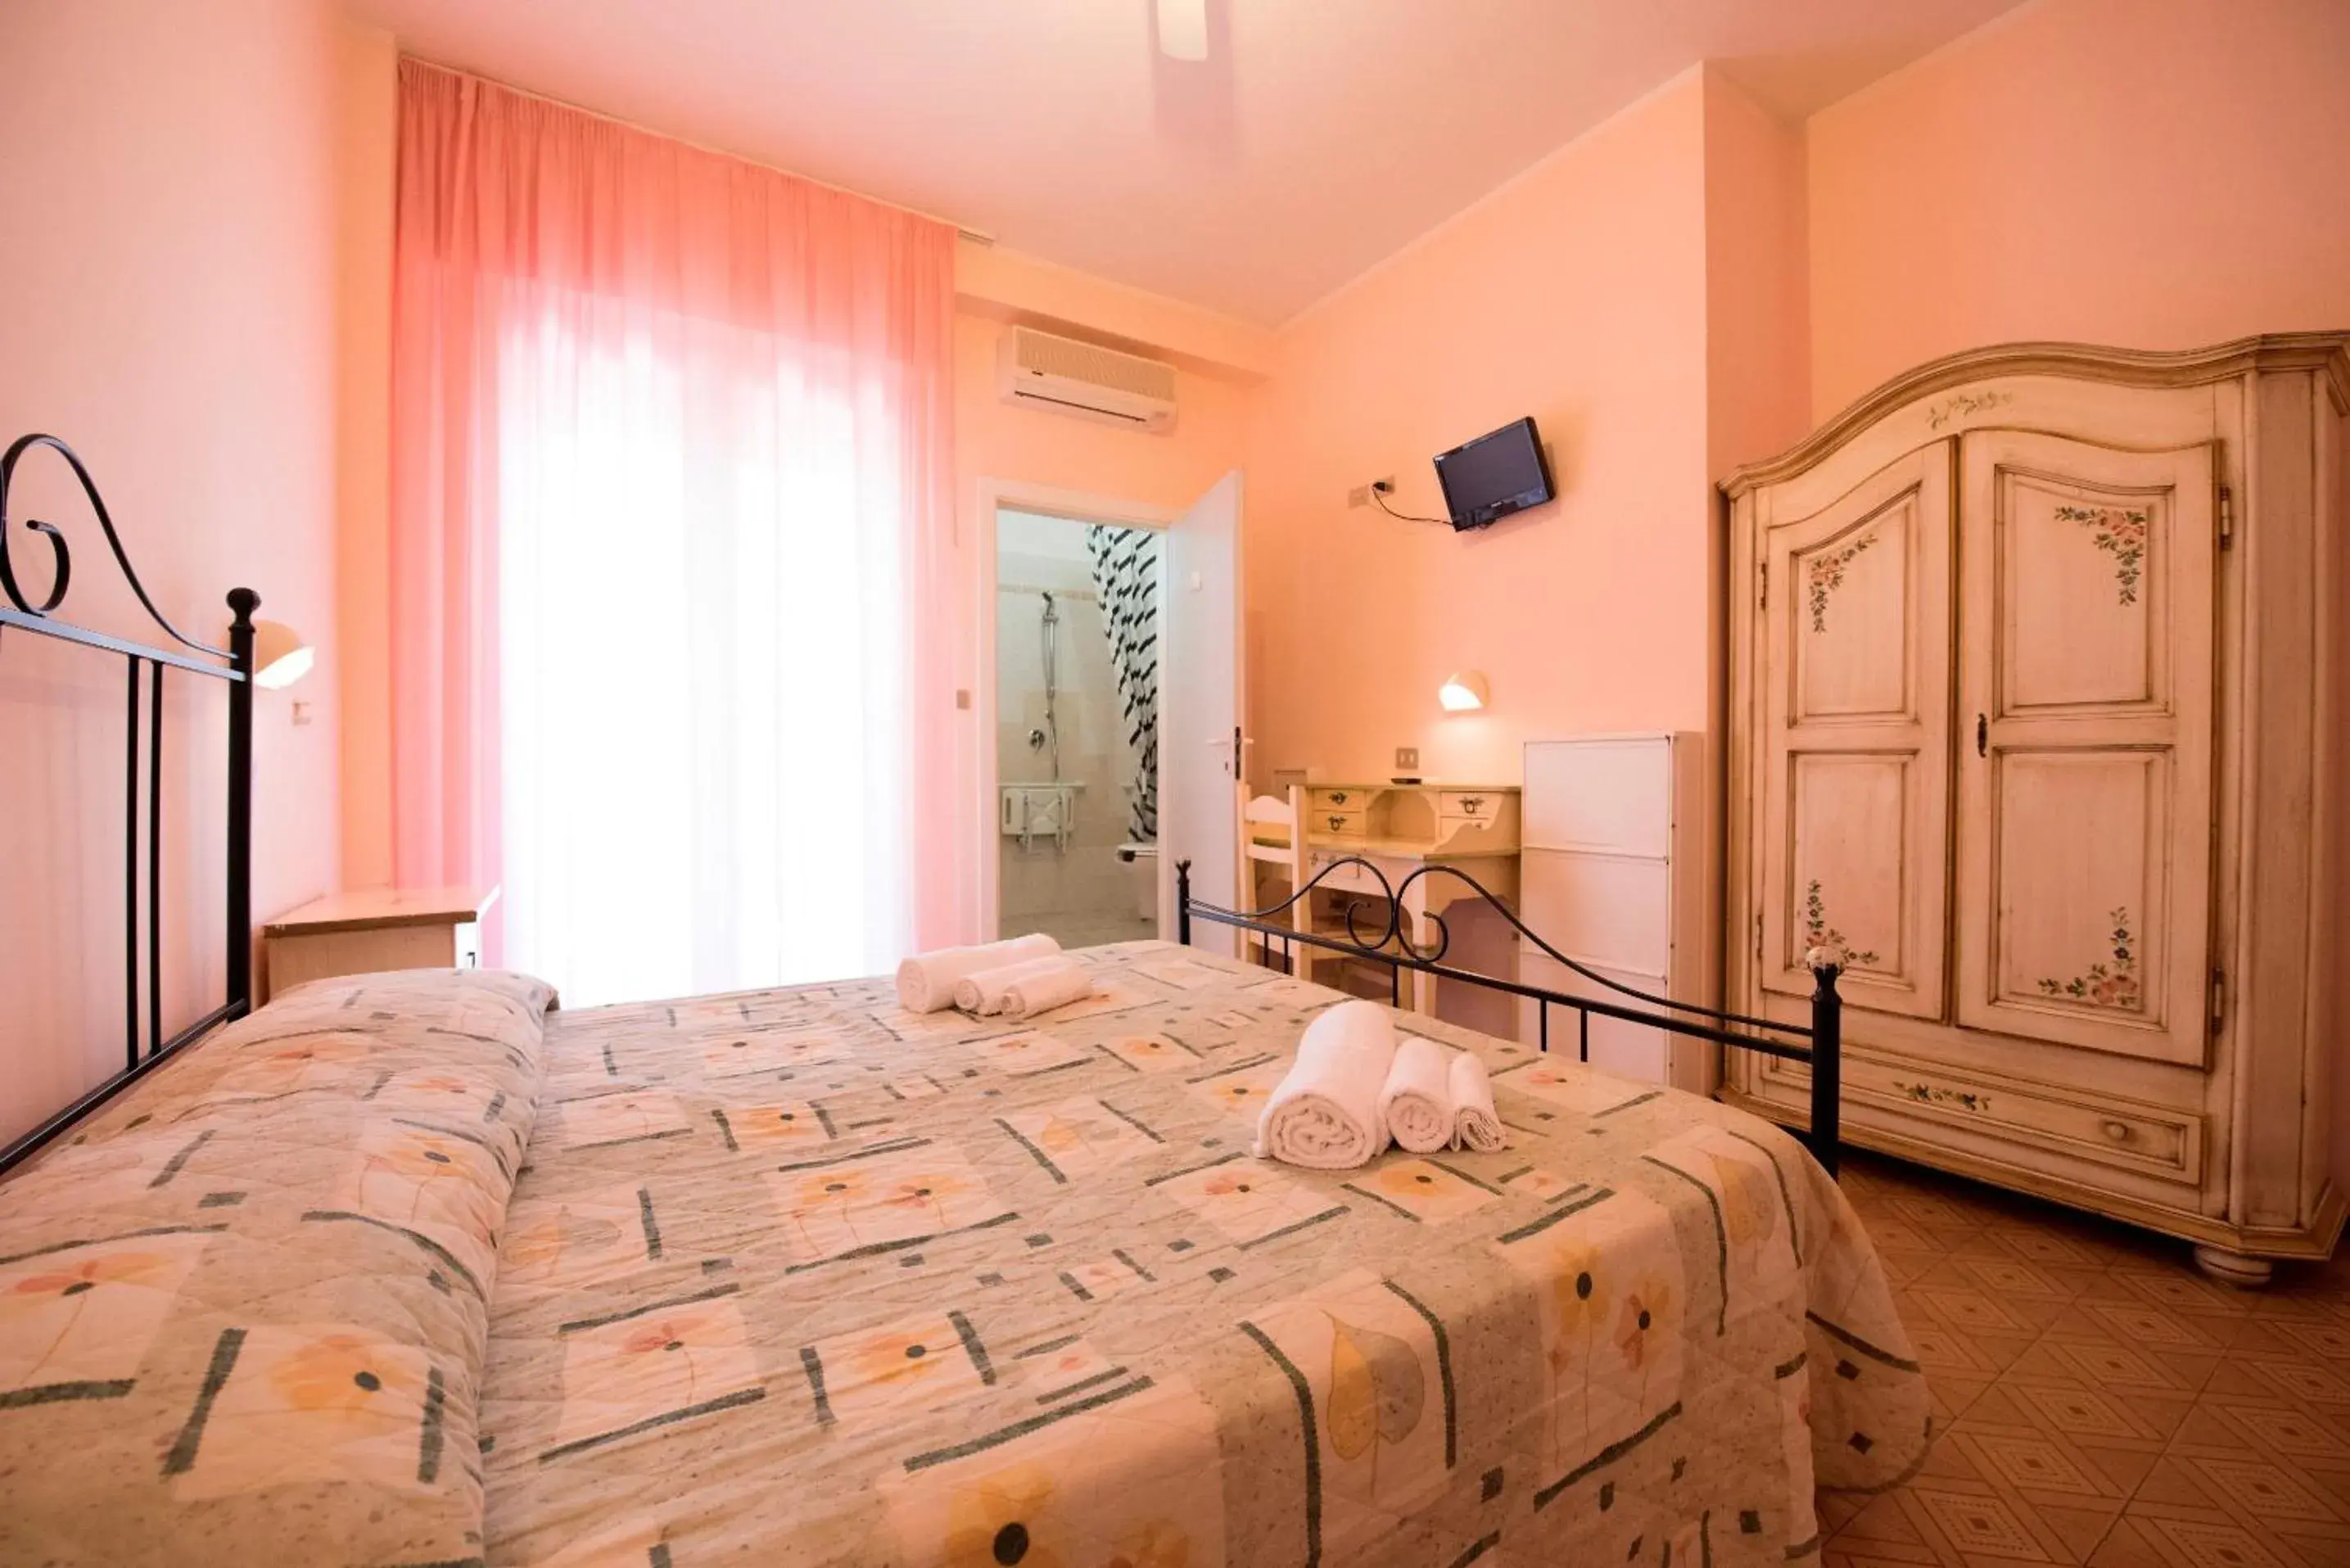 Bedroom, Room Photo in Hotel Settebello B&B